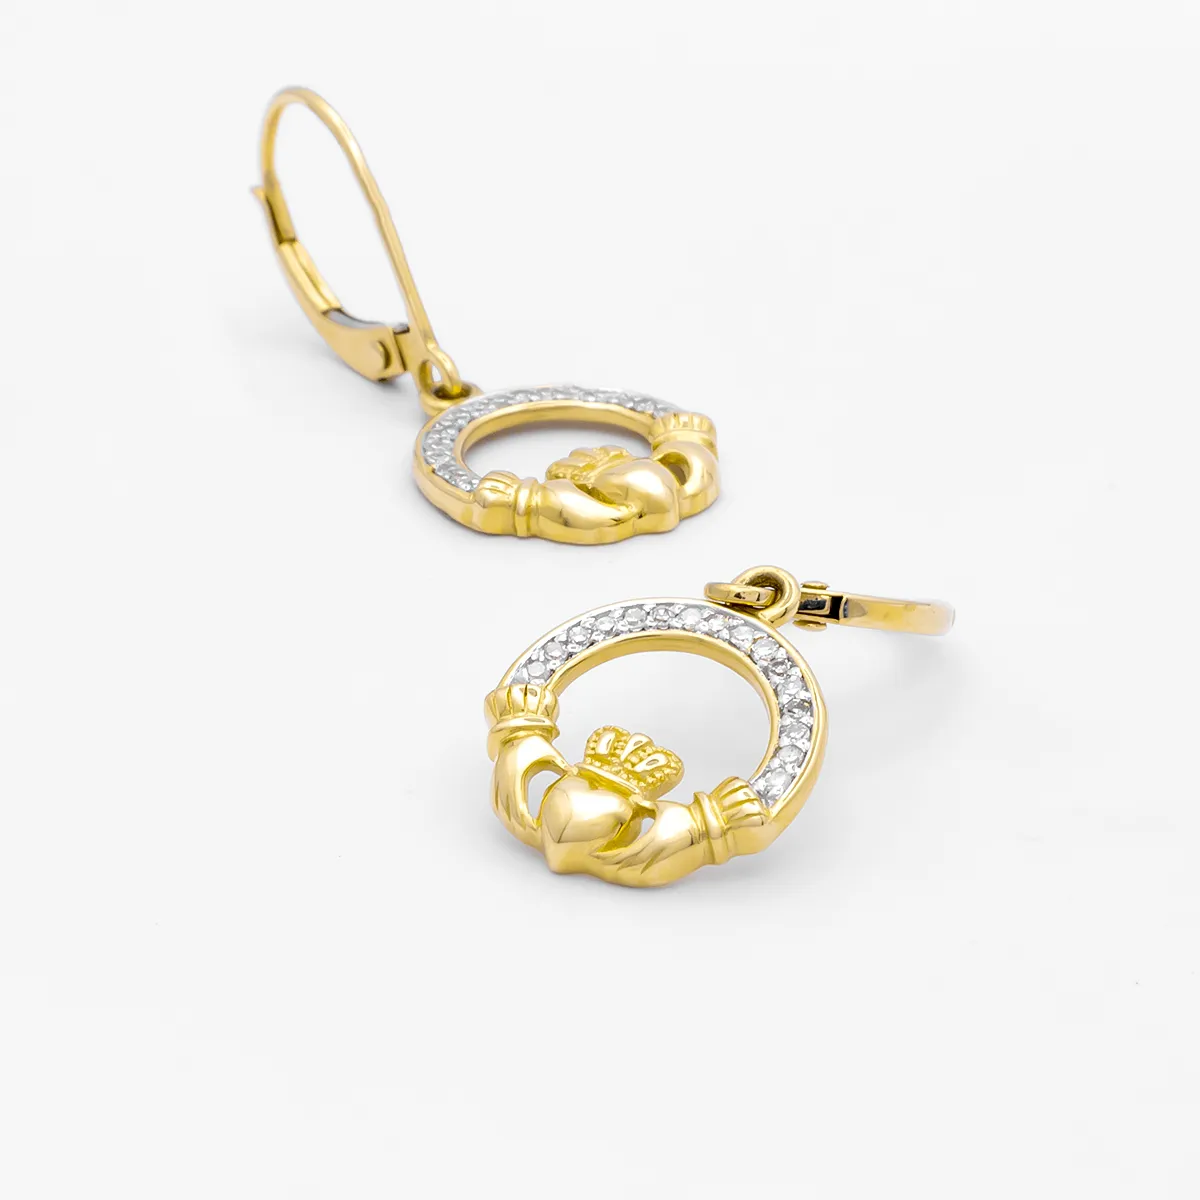 IJCE0012 Yellow Gold Claddagh Ring Earrings 8